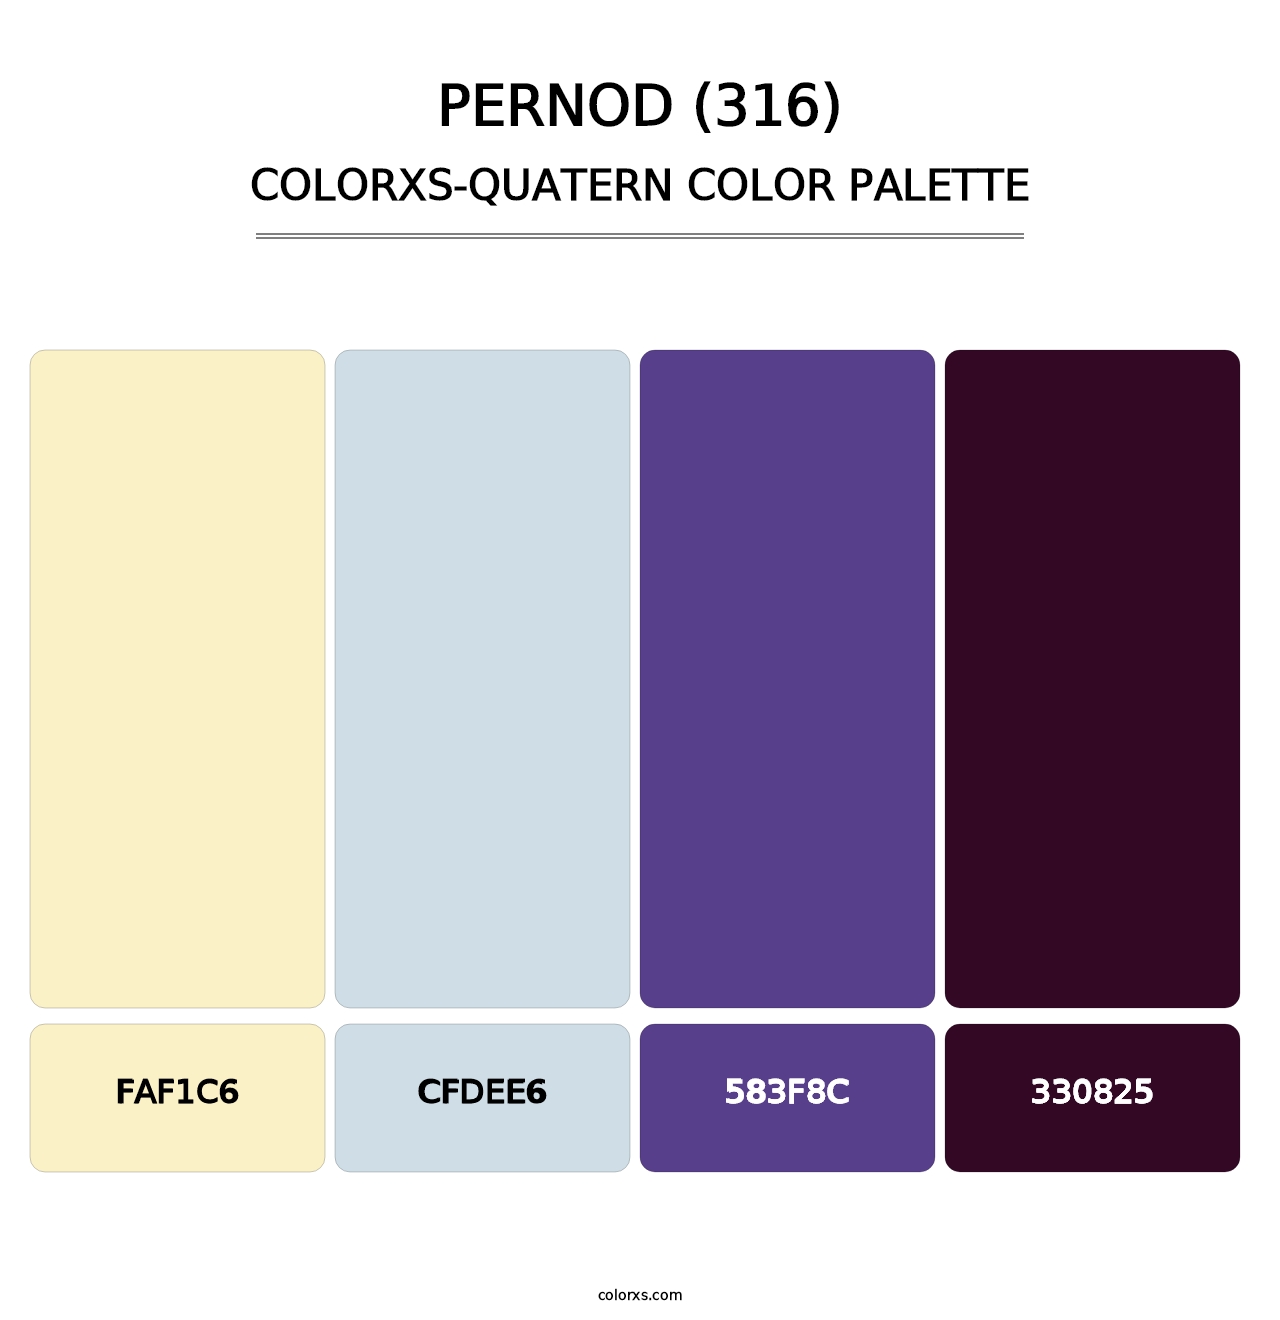 Pernod (316) - Colorxs Quatern Palette